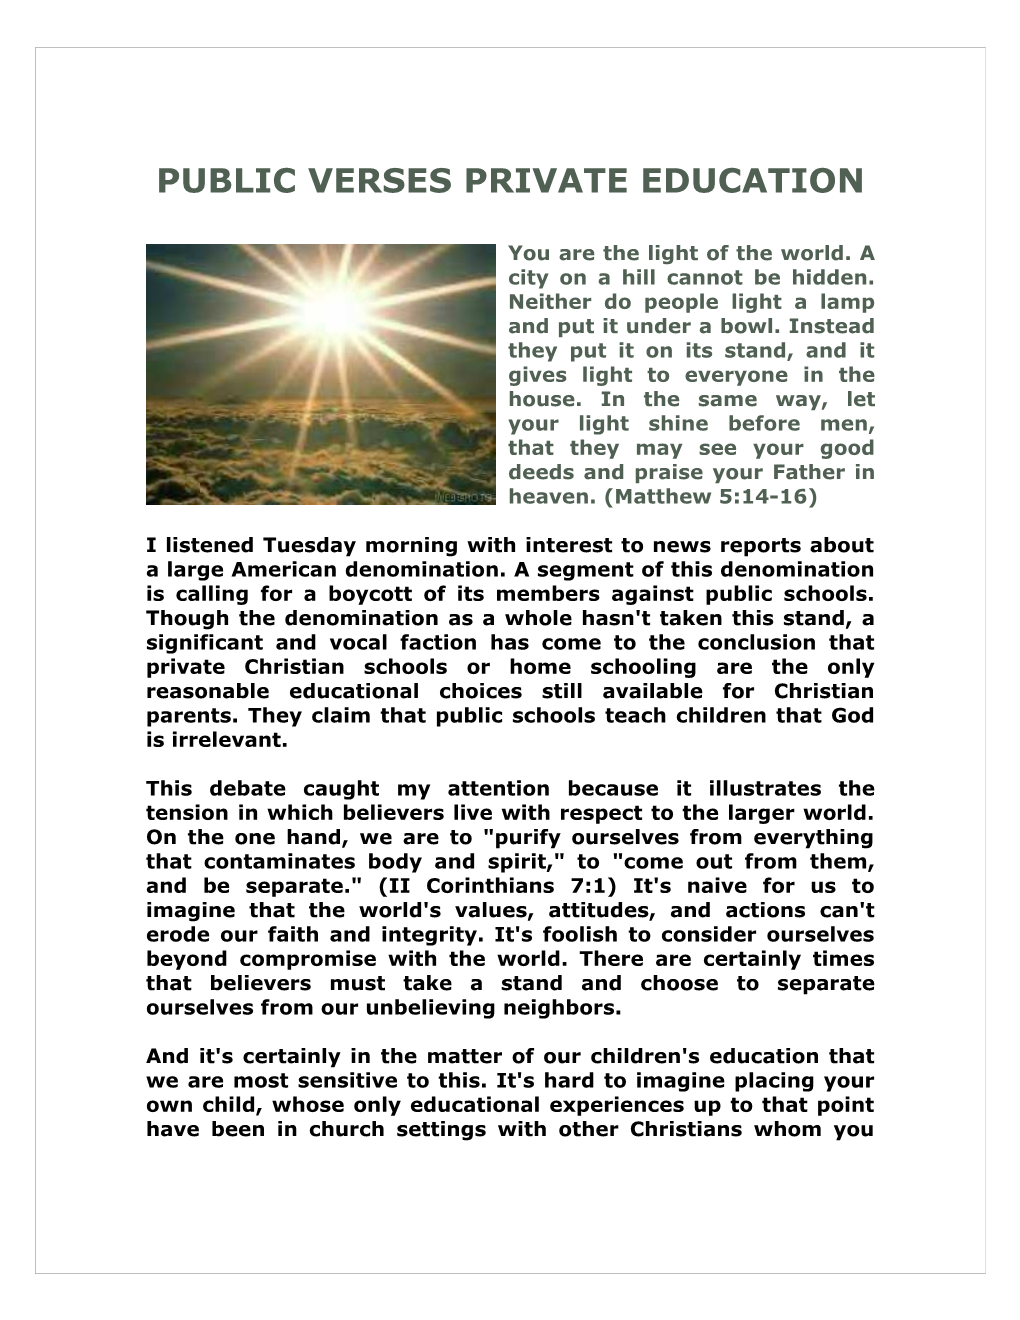 Public Verses Private Education